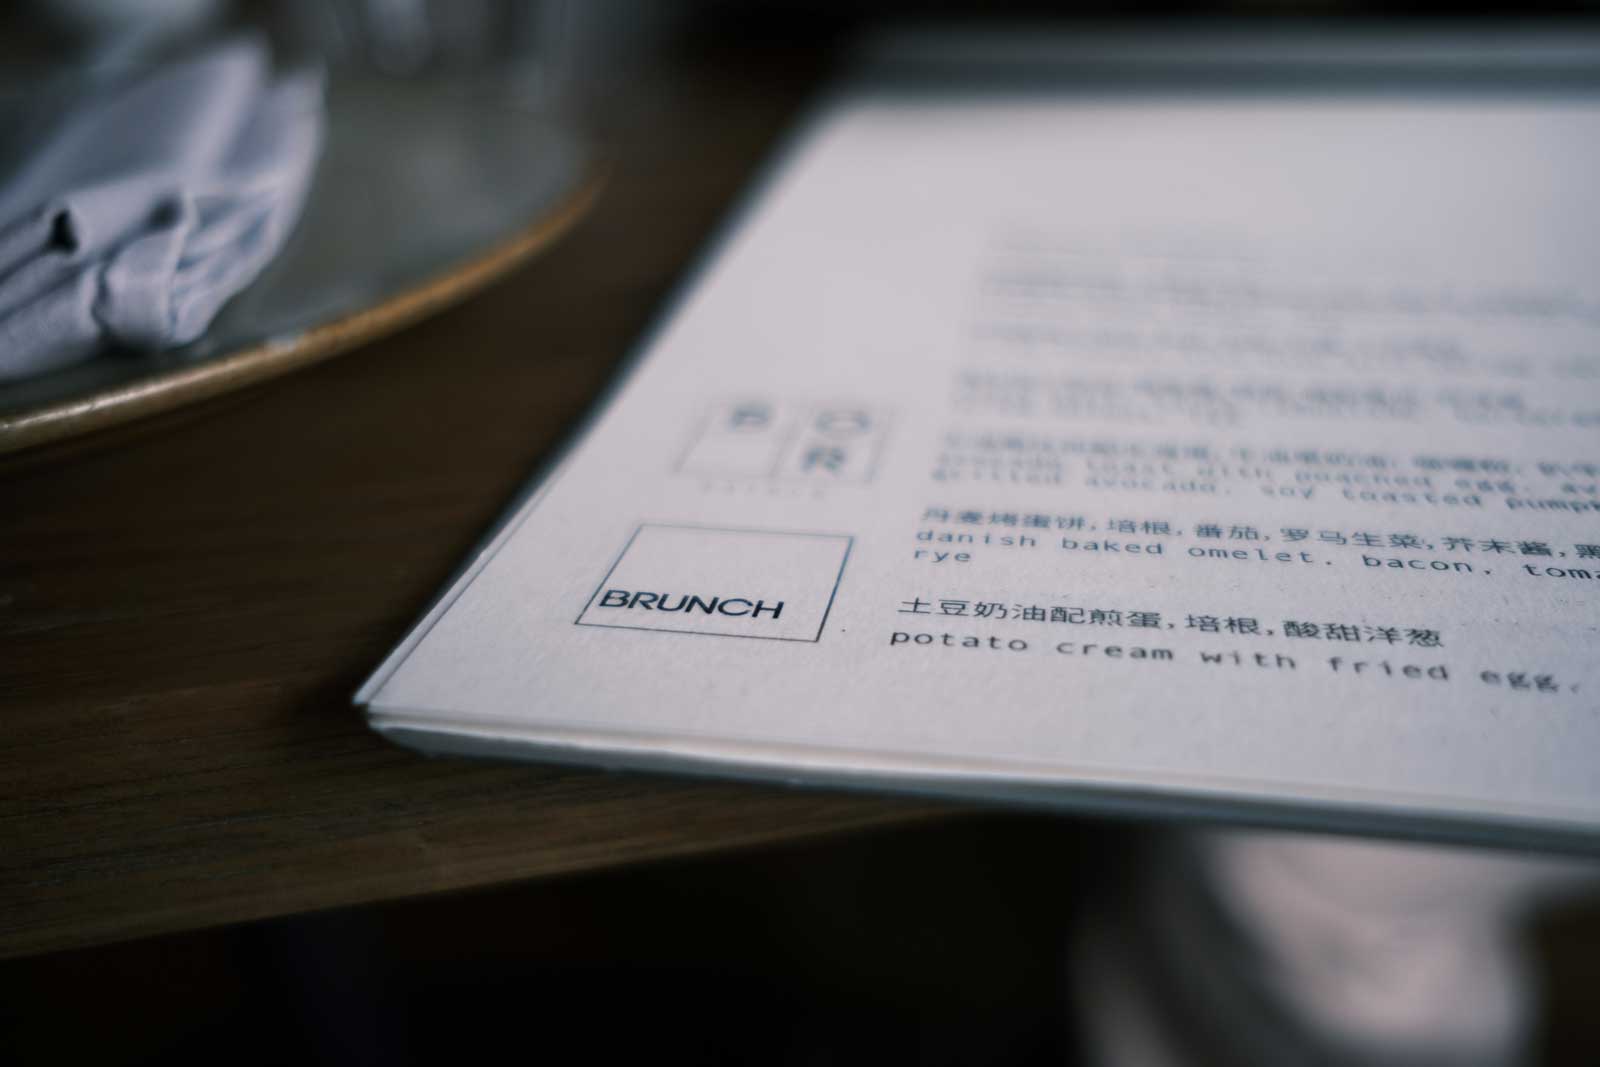 Best practices for printing restaurant menus